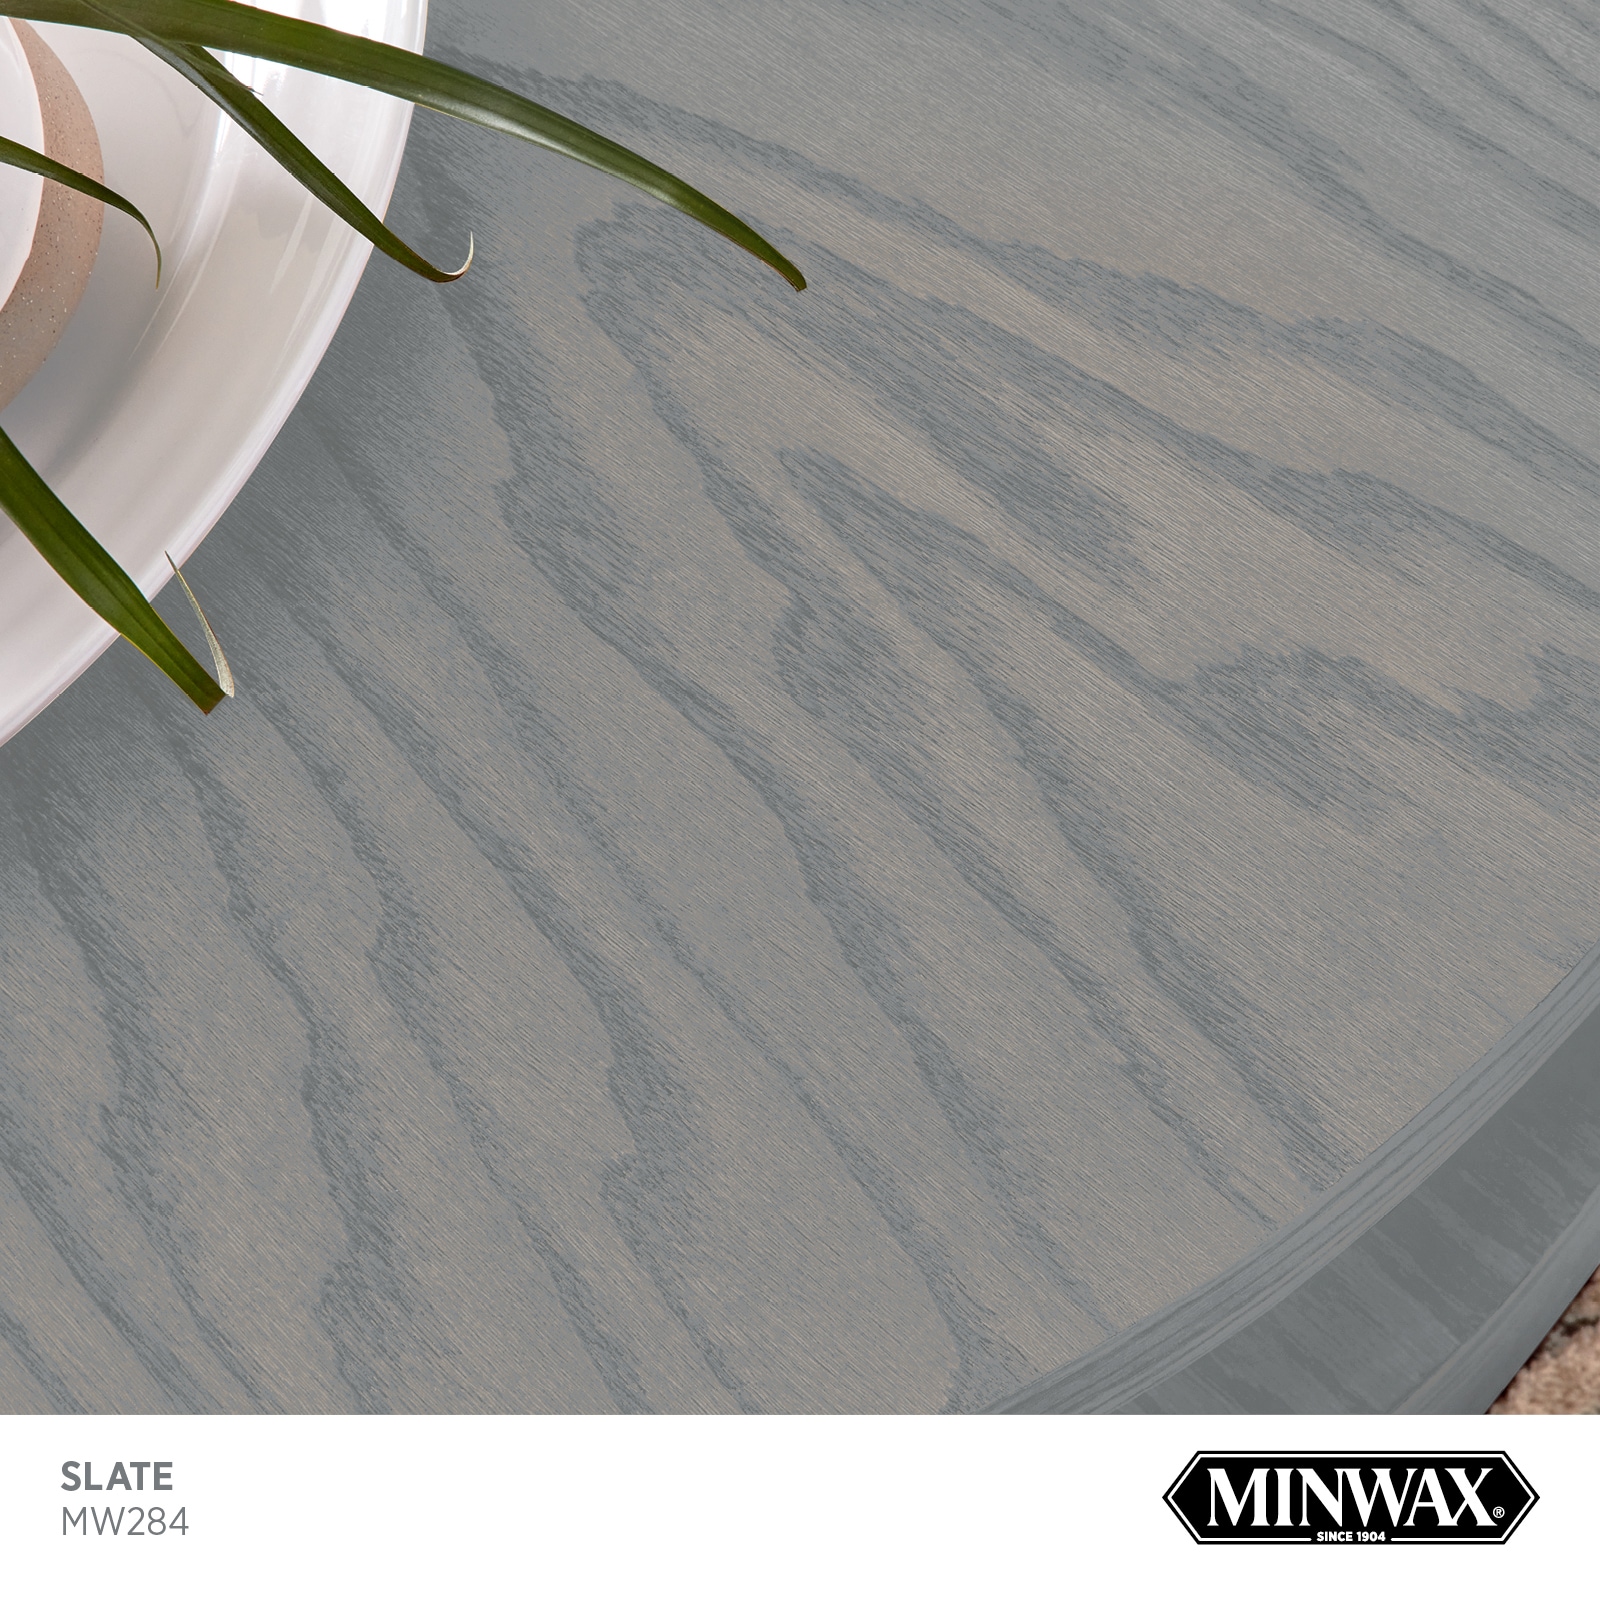 Minwax Wood Finish Water-Based Slate Blue Mw1080 Solid Interior